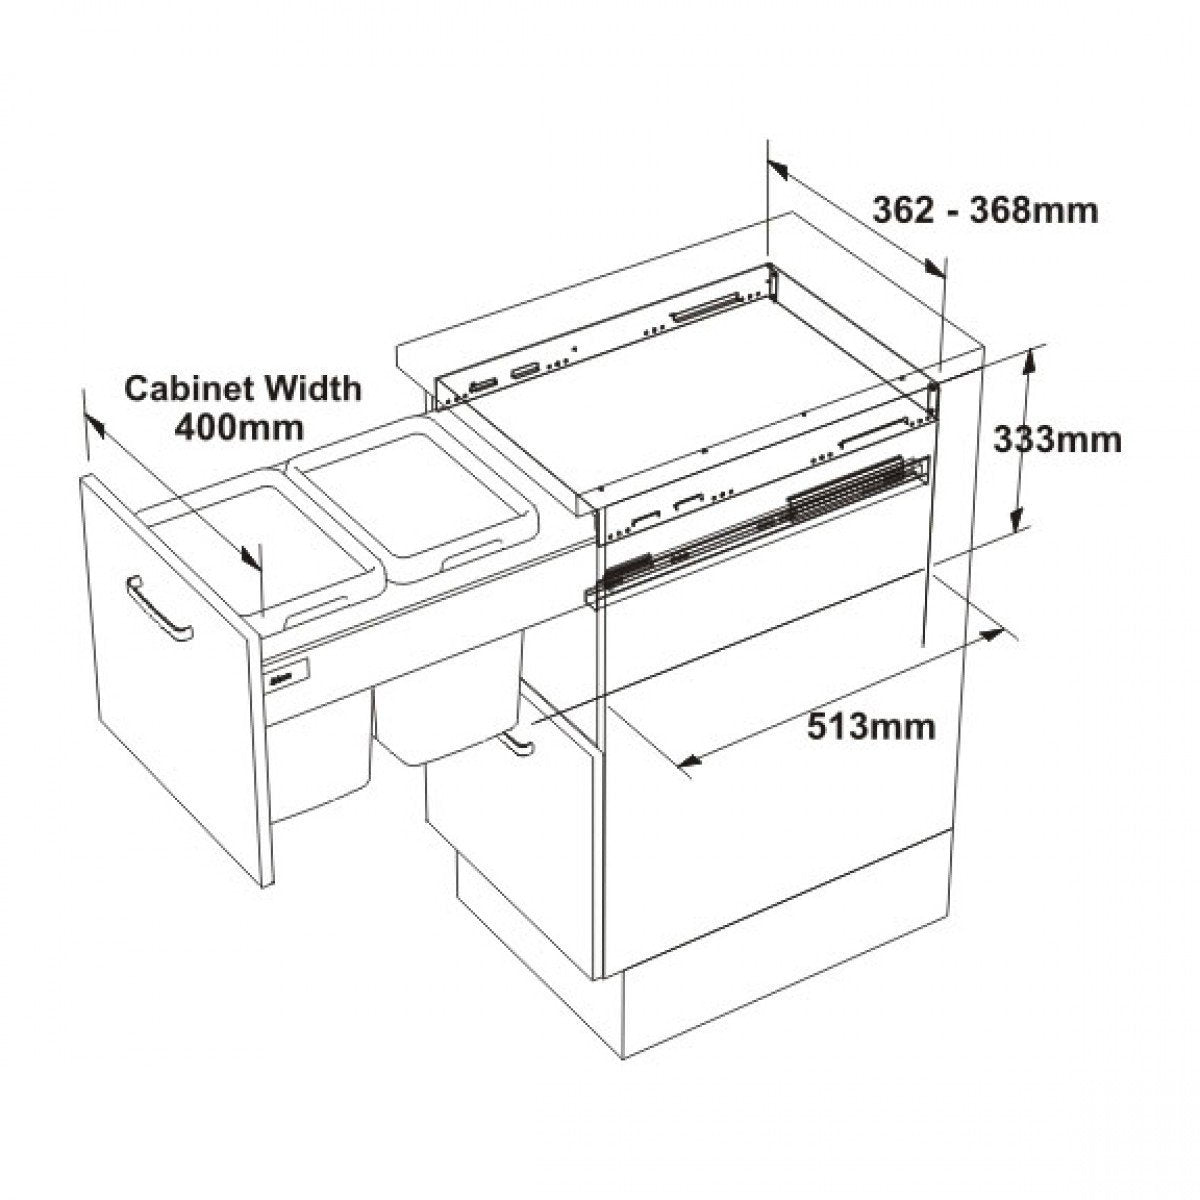 Deluxe S/C 26L Waste Bin For 400mm Cabinet Soft Close Storage Arova Kitchens & Bathrooms 